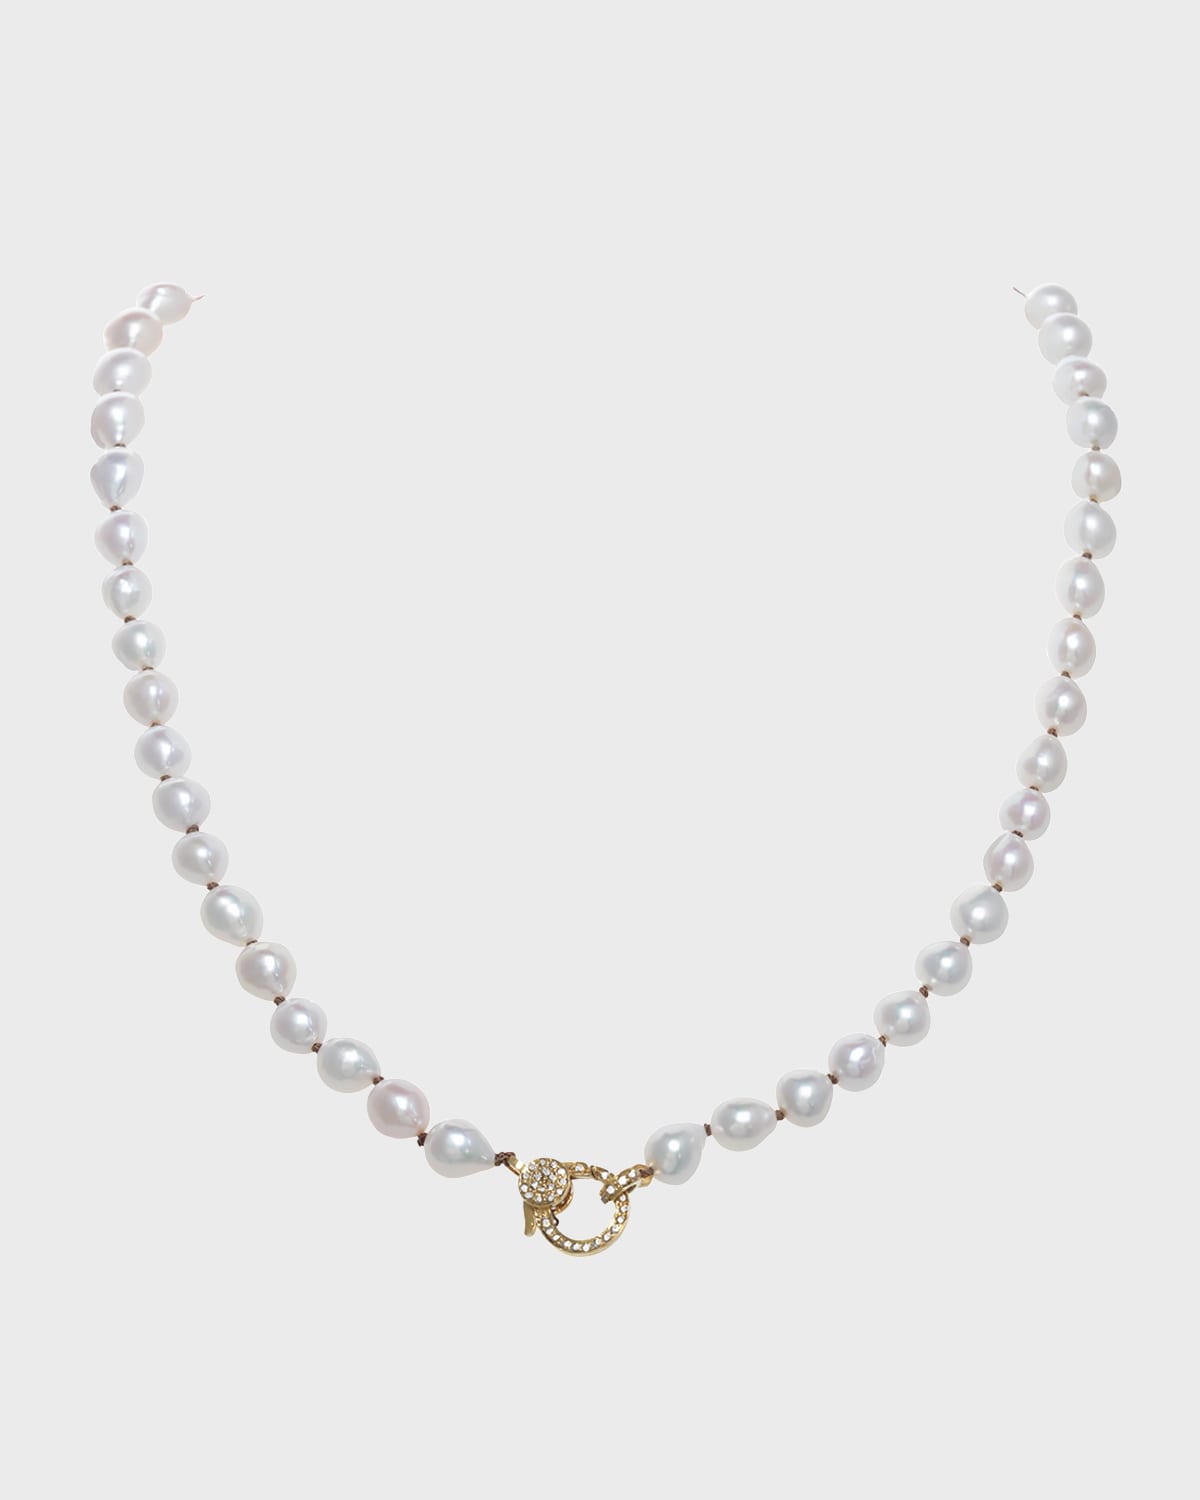 Petite Baroque Pearl Necklace with Vermeil Diamond Clasp, 7-8 mm 18"L